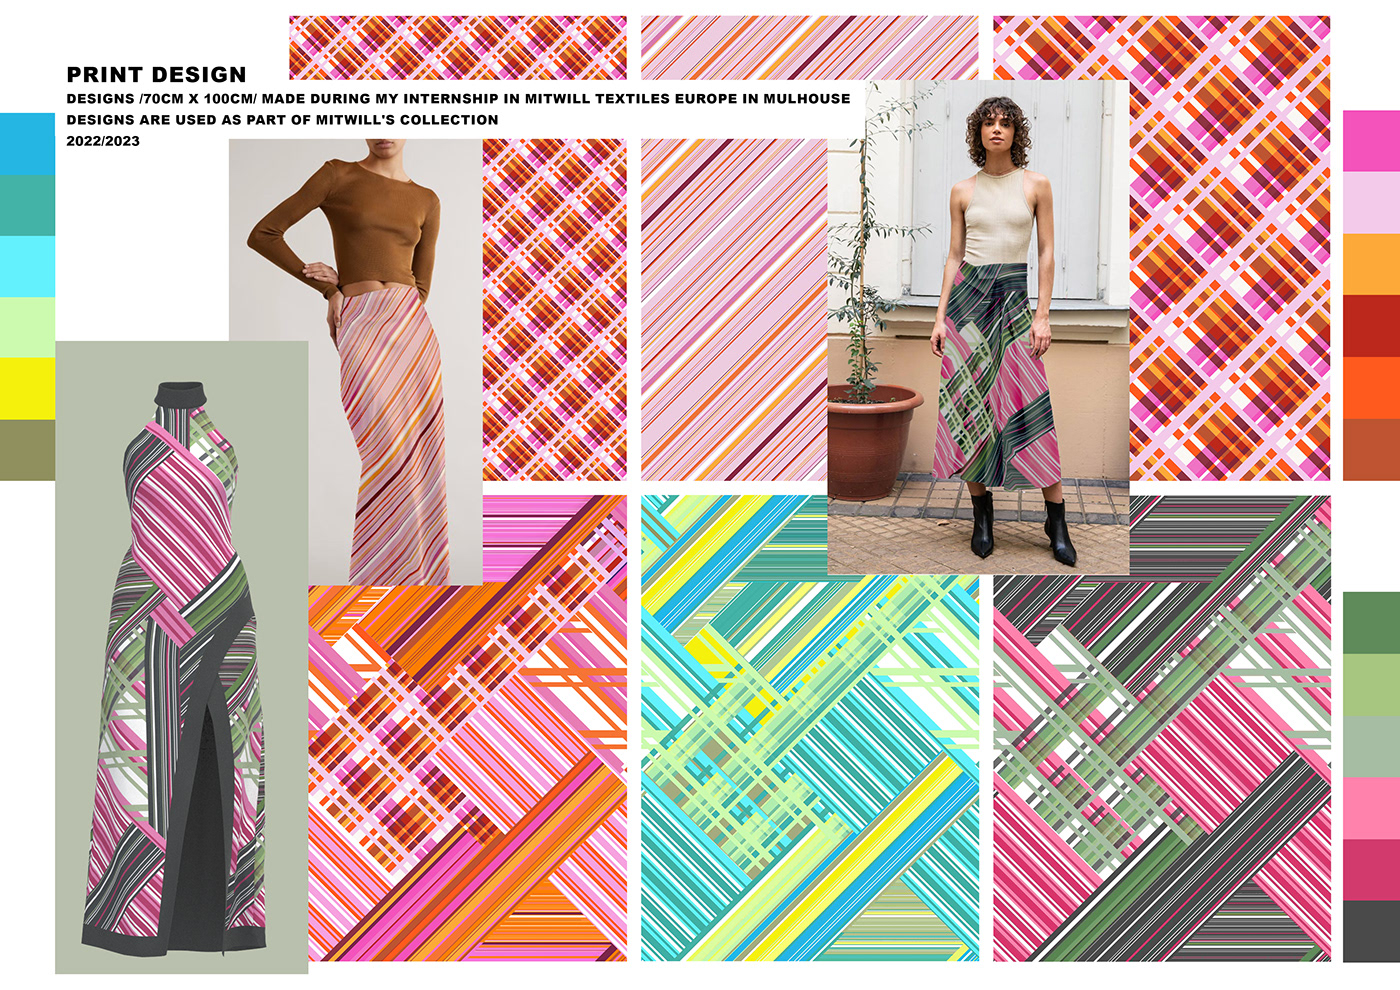 textile printdesign textiledesigner patterndesign printdesigner fashionprint geometrics patterndesigner TEXTILEPRINT textileprintdesign